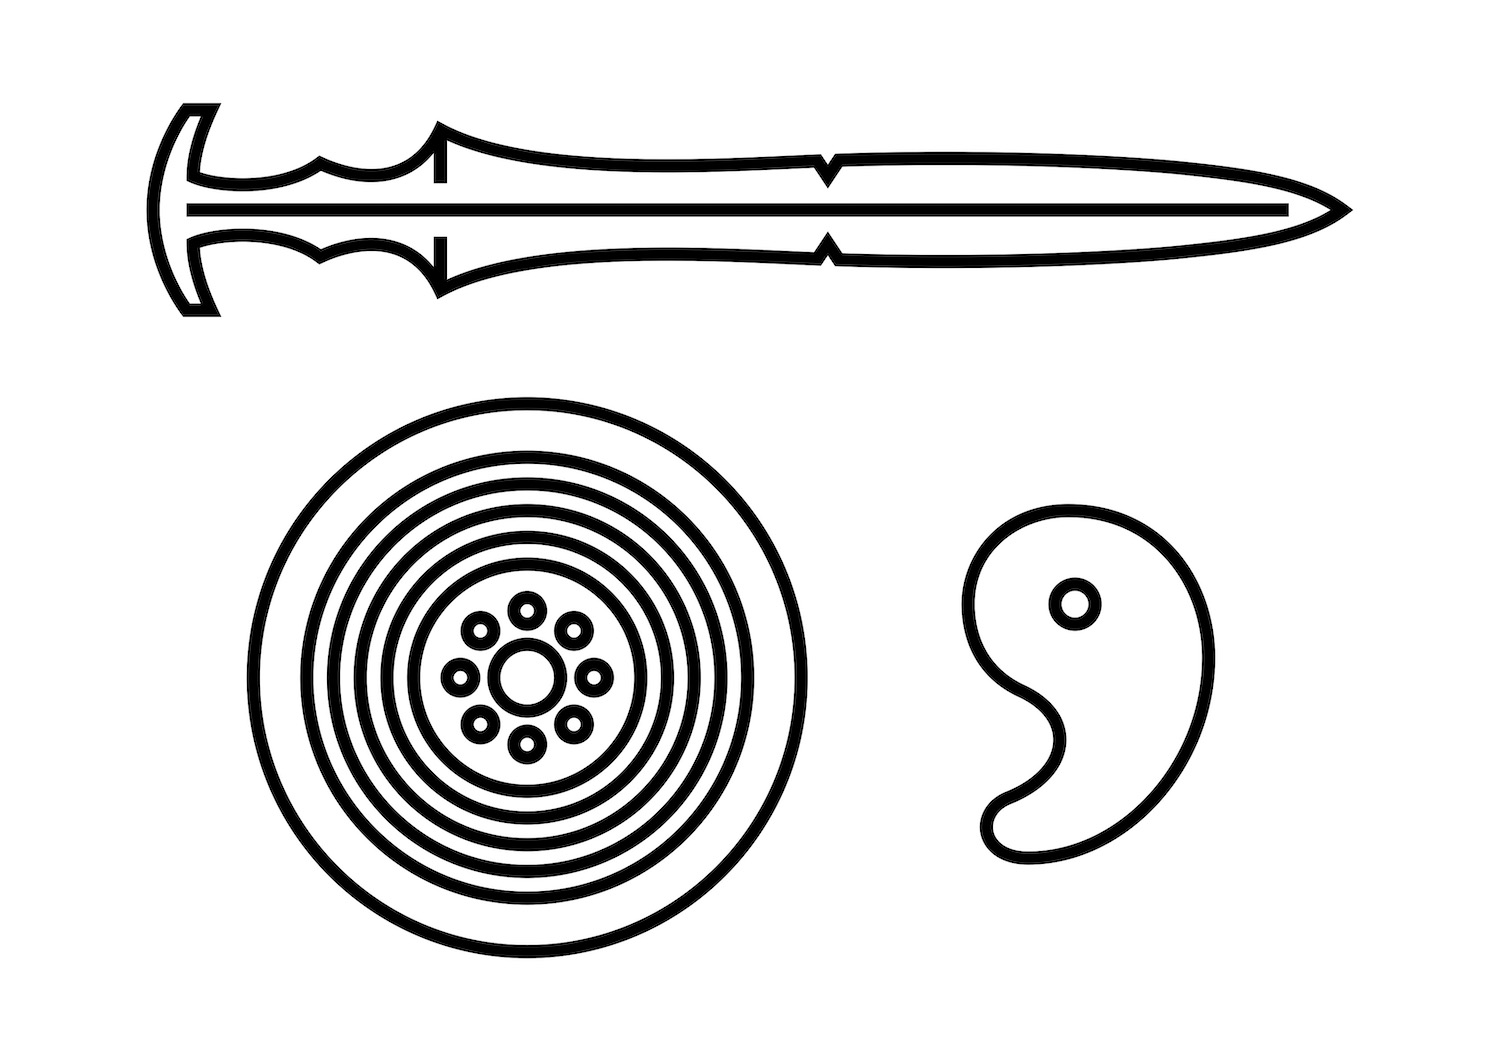 Simplified images of three regalia of Japan, sword, mirror, and magatama (comma-shaped bead)